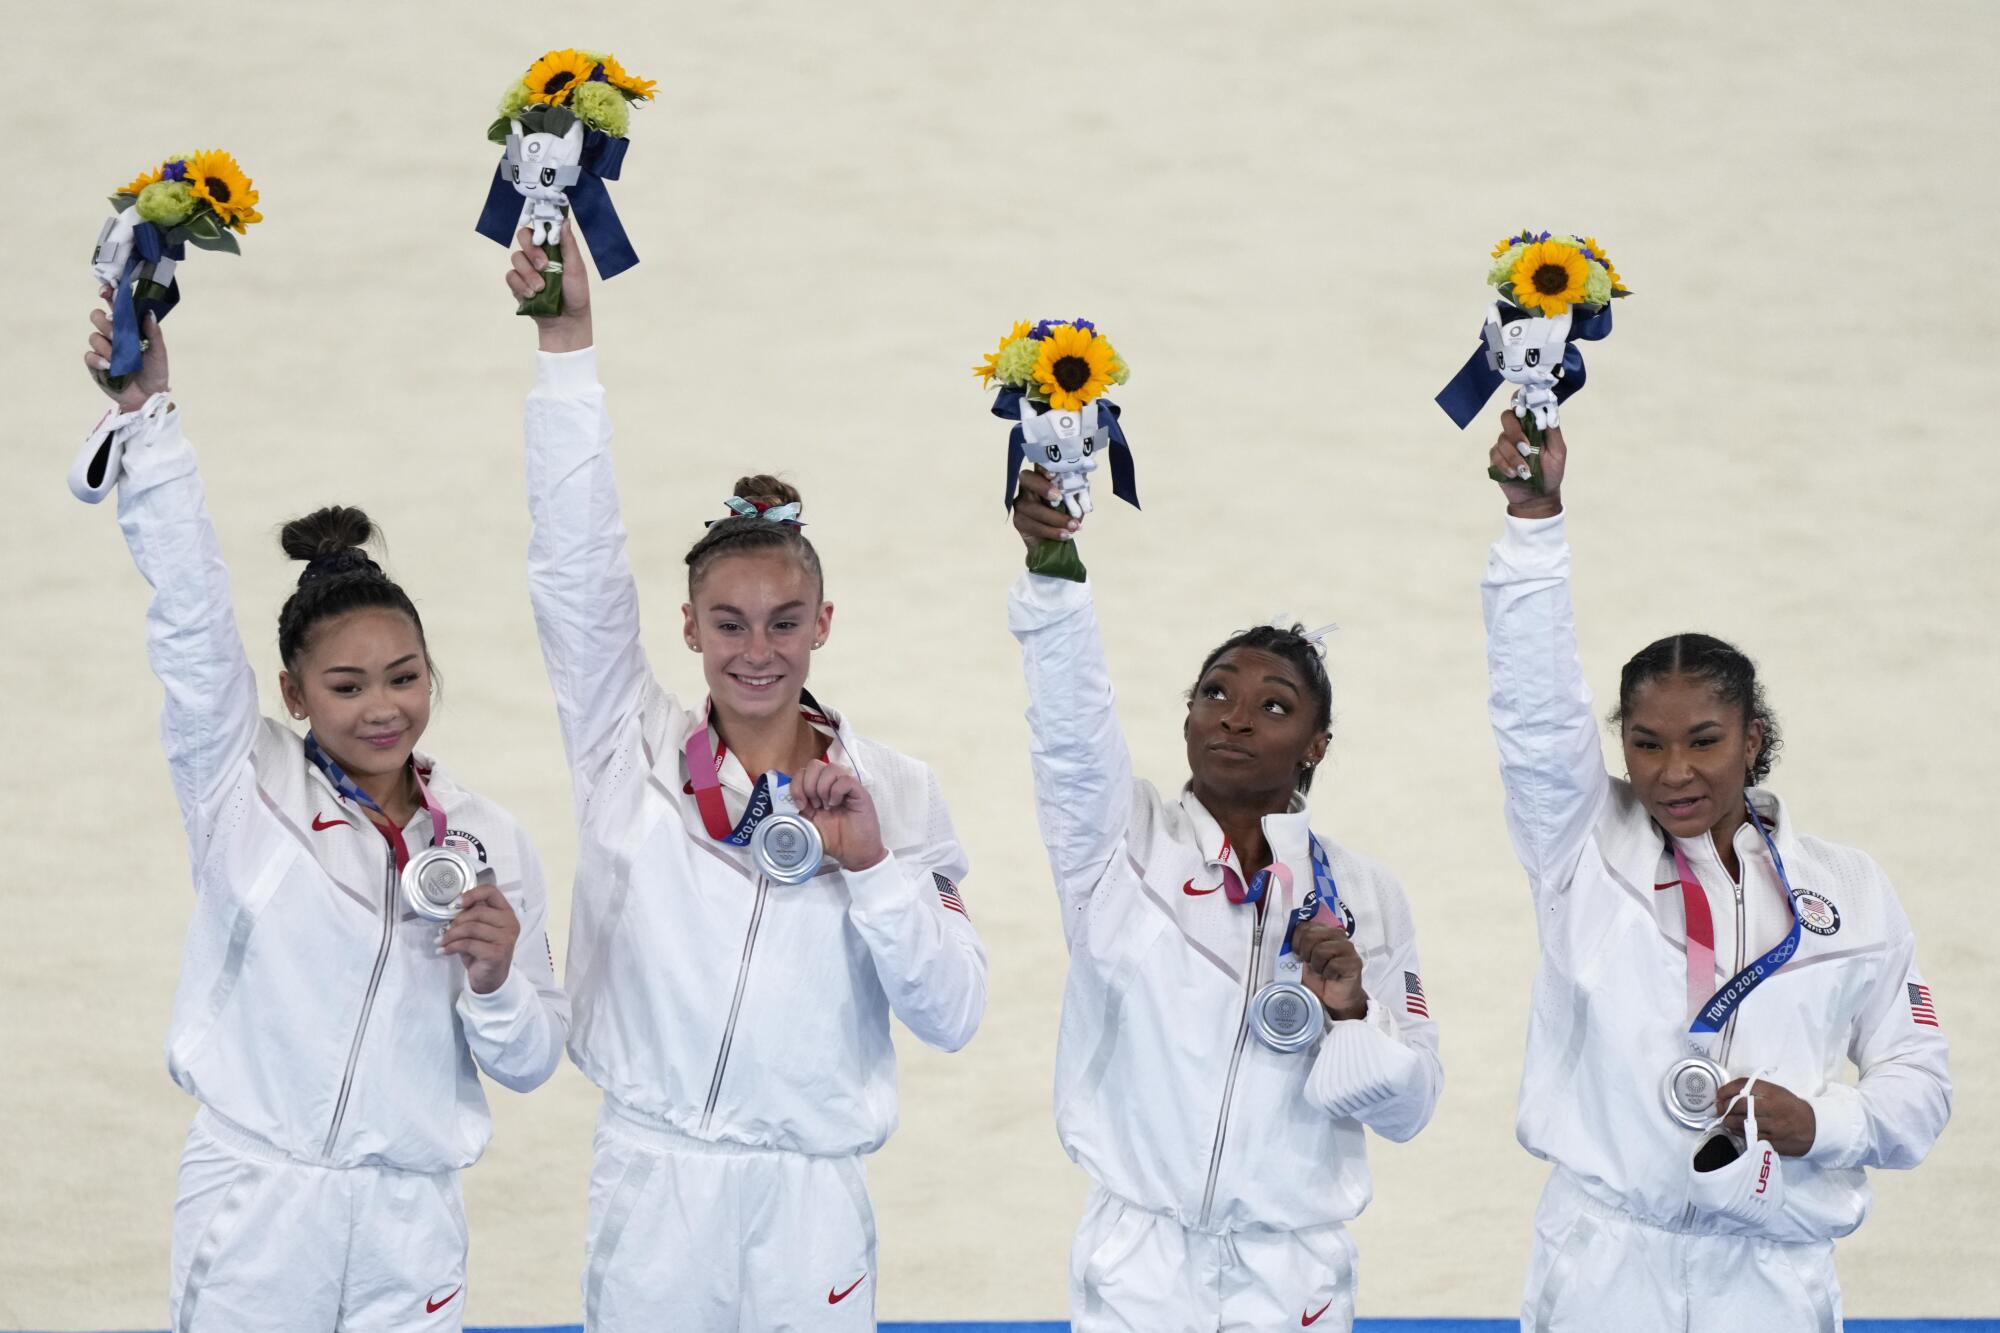 U.S. gymnasts Sunisa Lee, Grace McCallum, Simone Biles and Jordan Chiles celebrate after winning silver medals